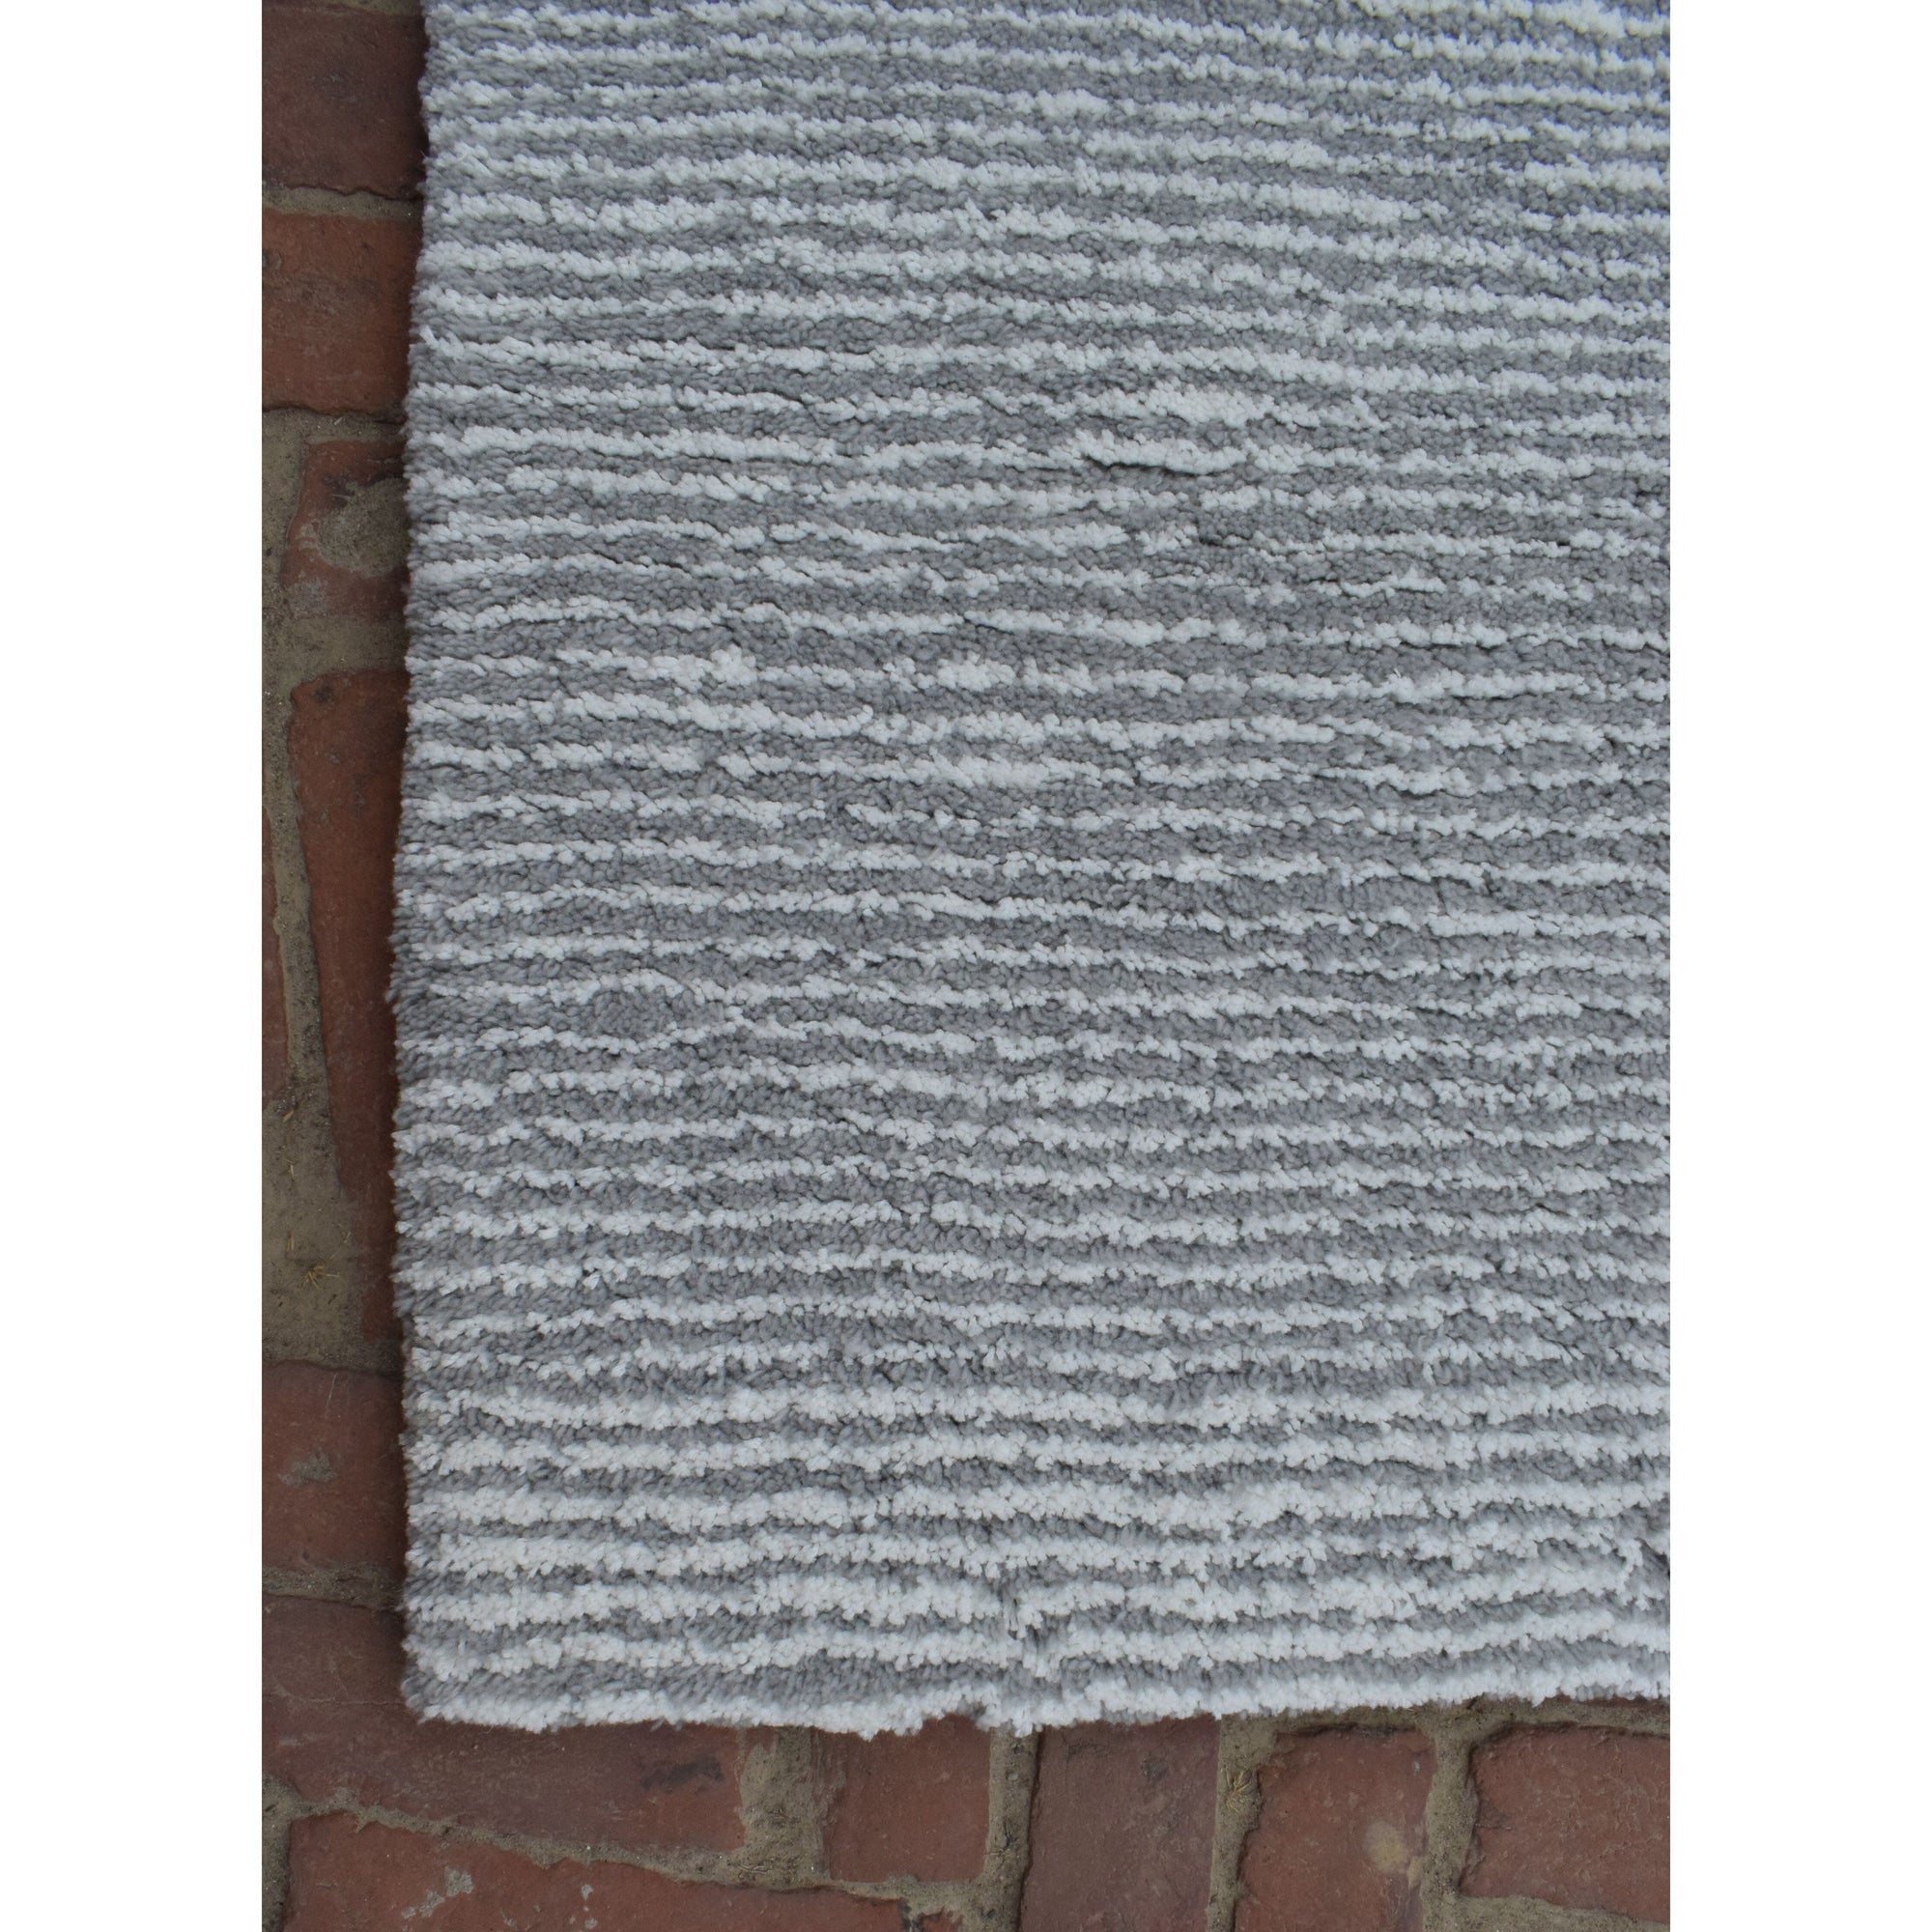 Seersucker Wool + Cotton Shag Grey 9x12 handtufted wool + cotton shag Organic Weave Shop 